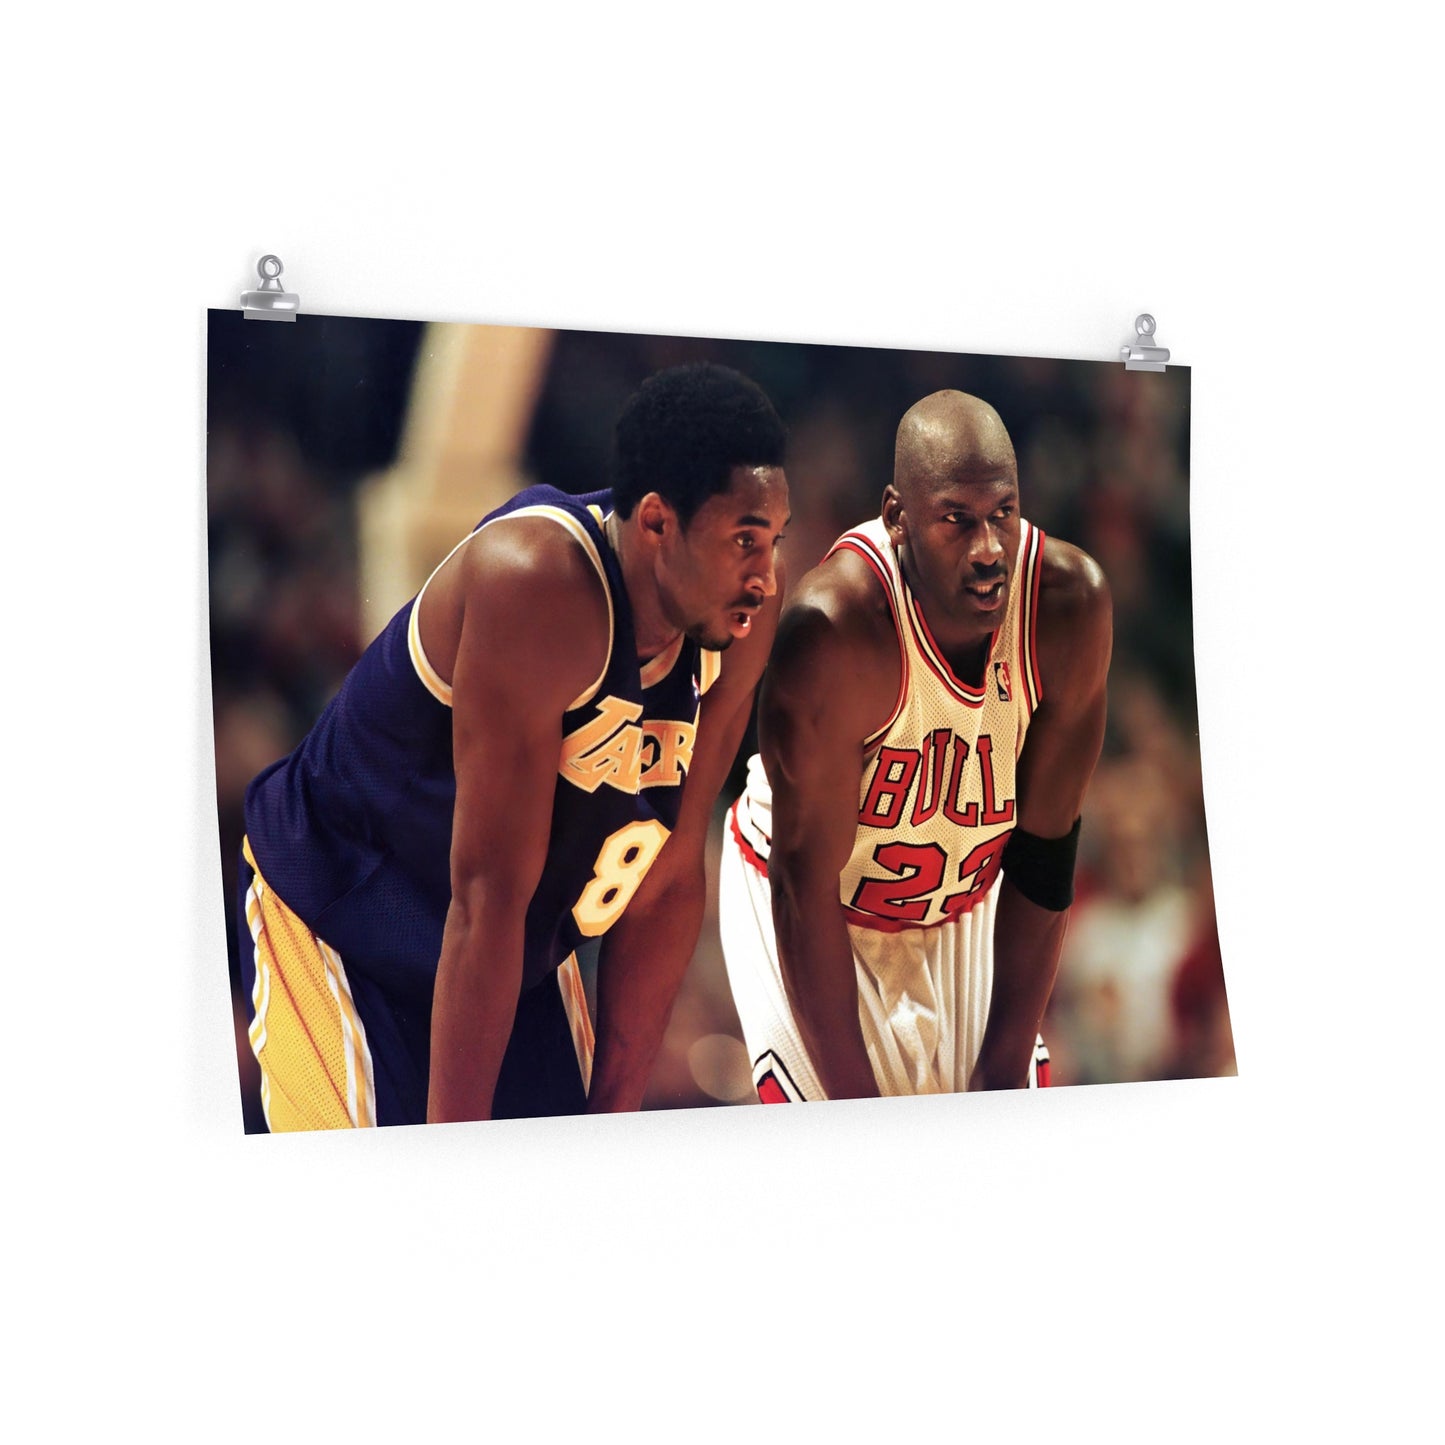 Michael Jordan And Kobe Bryant Speak On Court During An NBA Game Poster